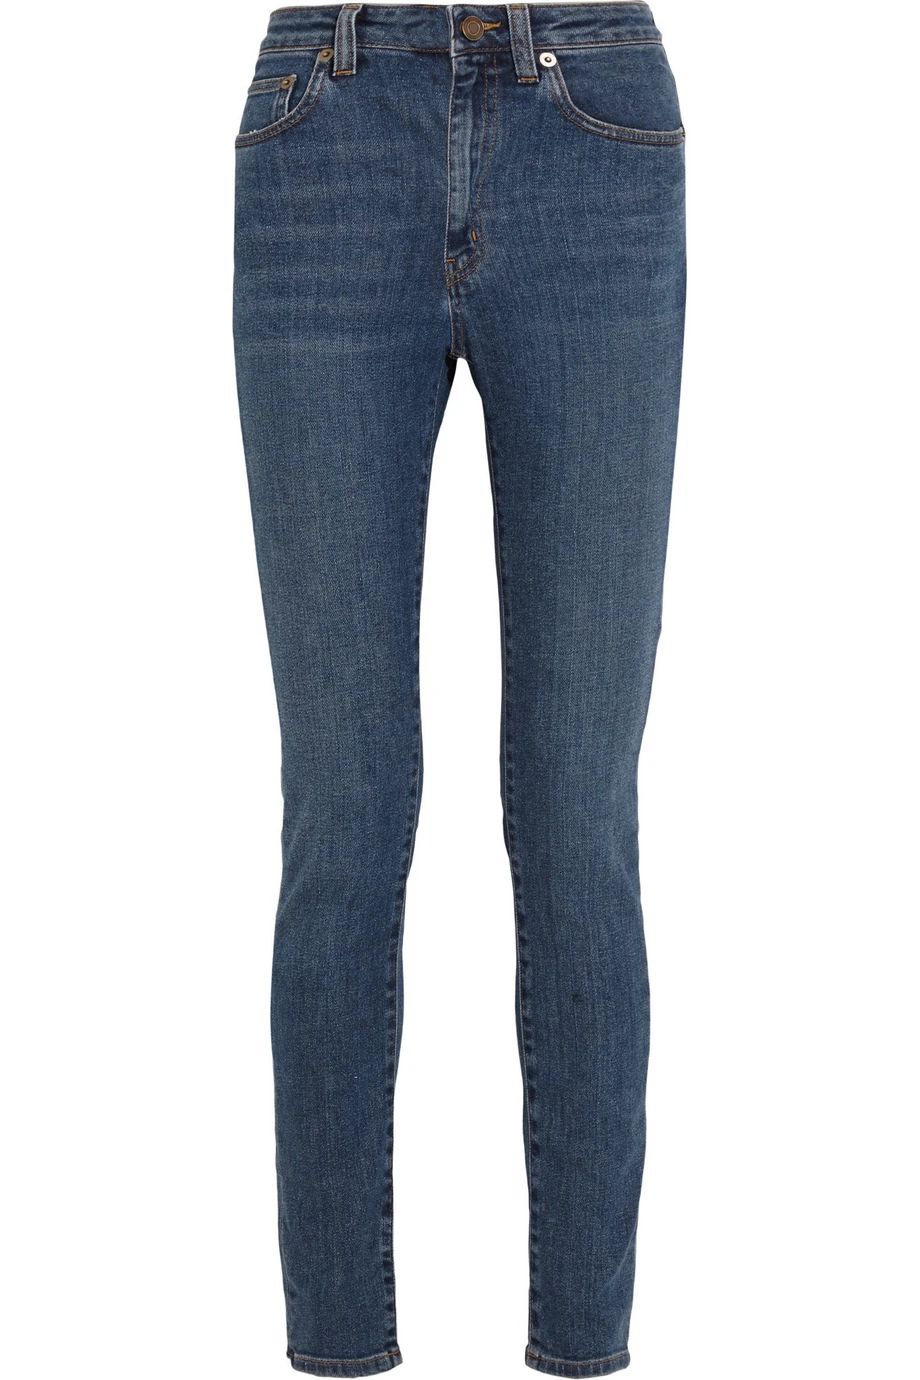 Saint Laurent High-Rise Skinny Jeans, Mid Denim, Women's, Size: 26 | NET-A-PORTER (US)